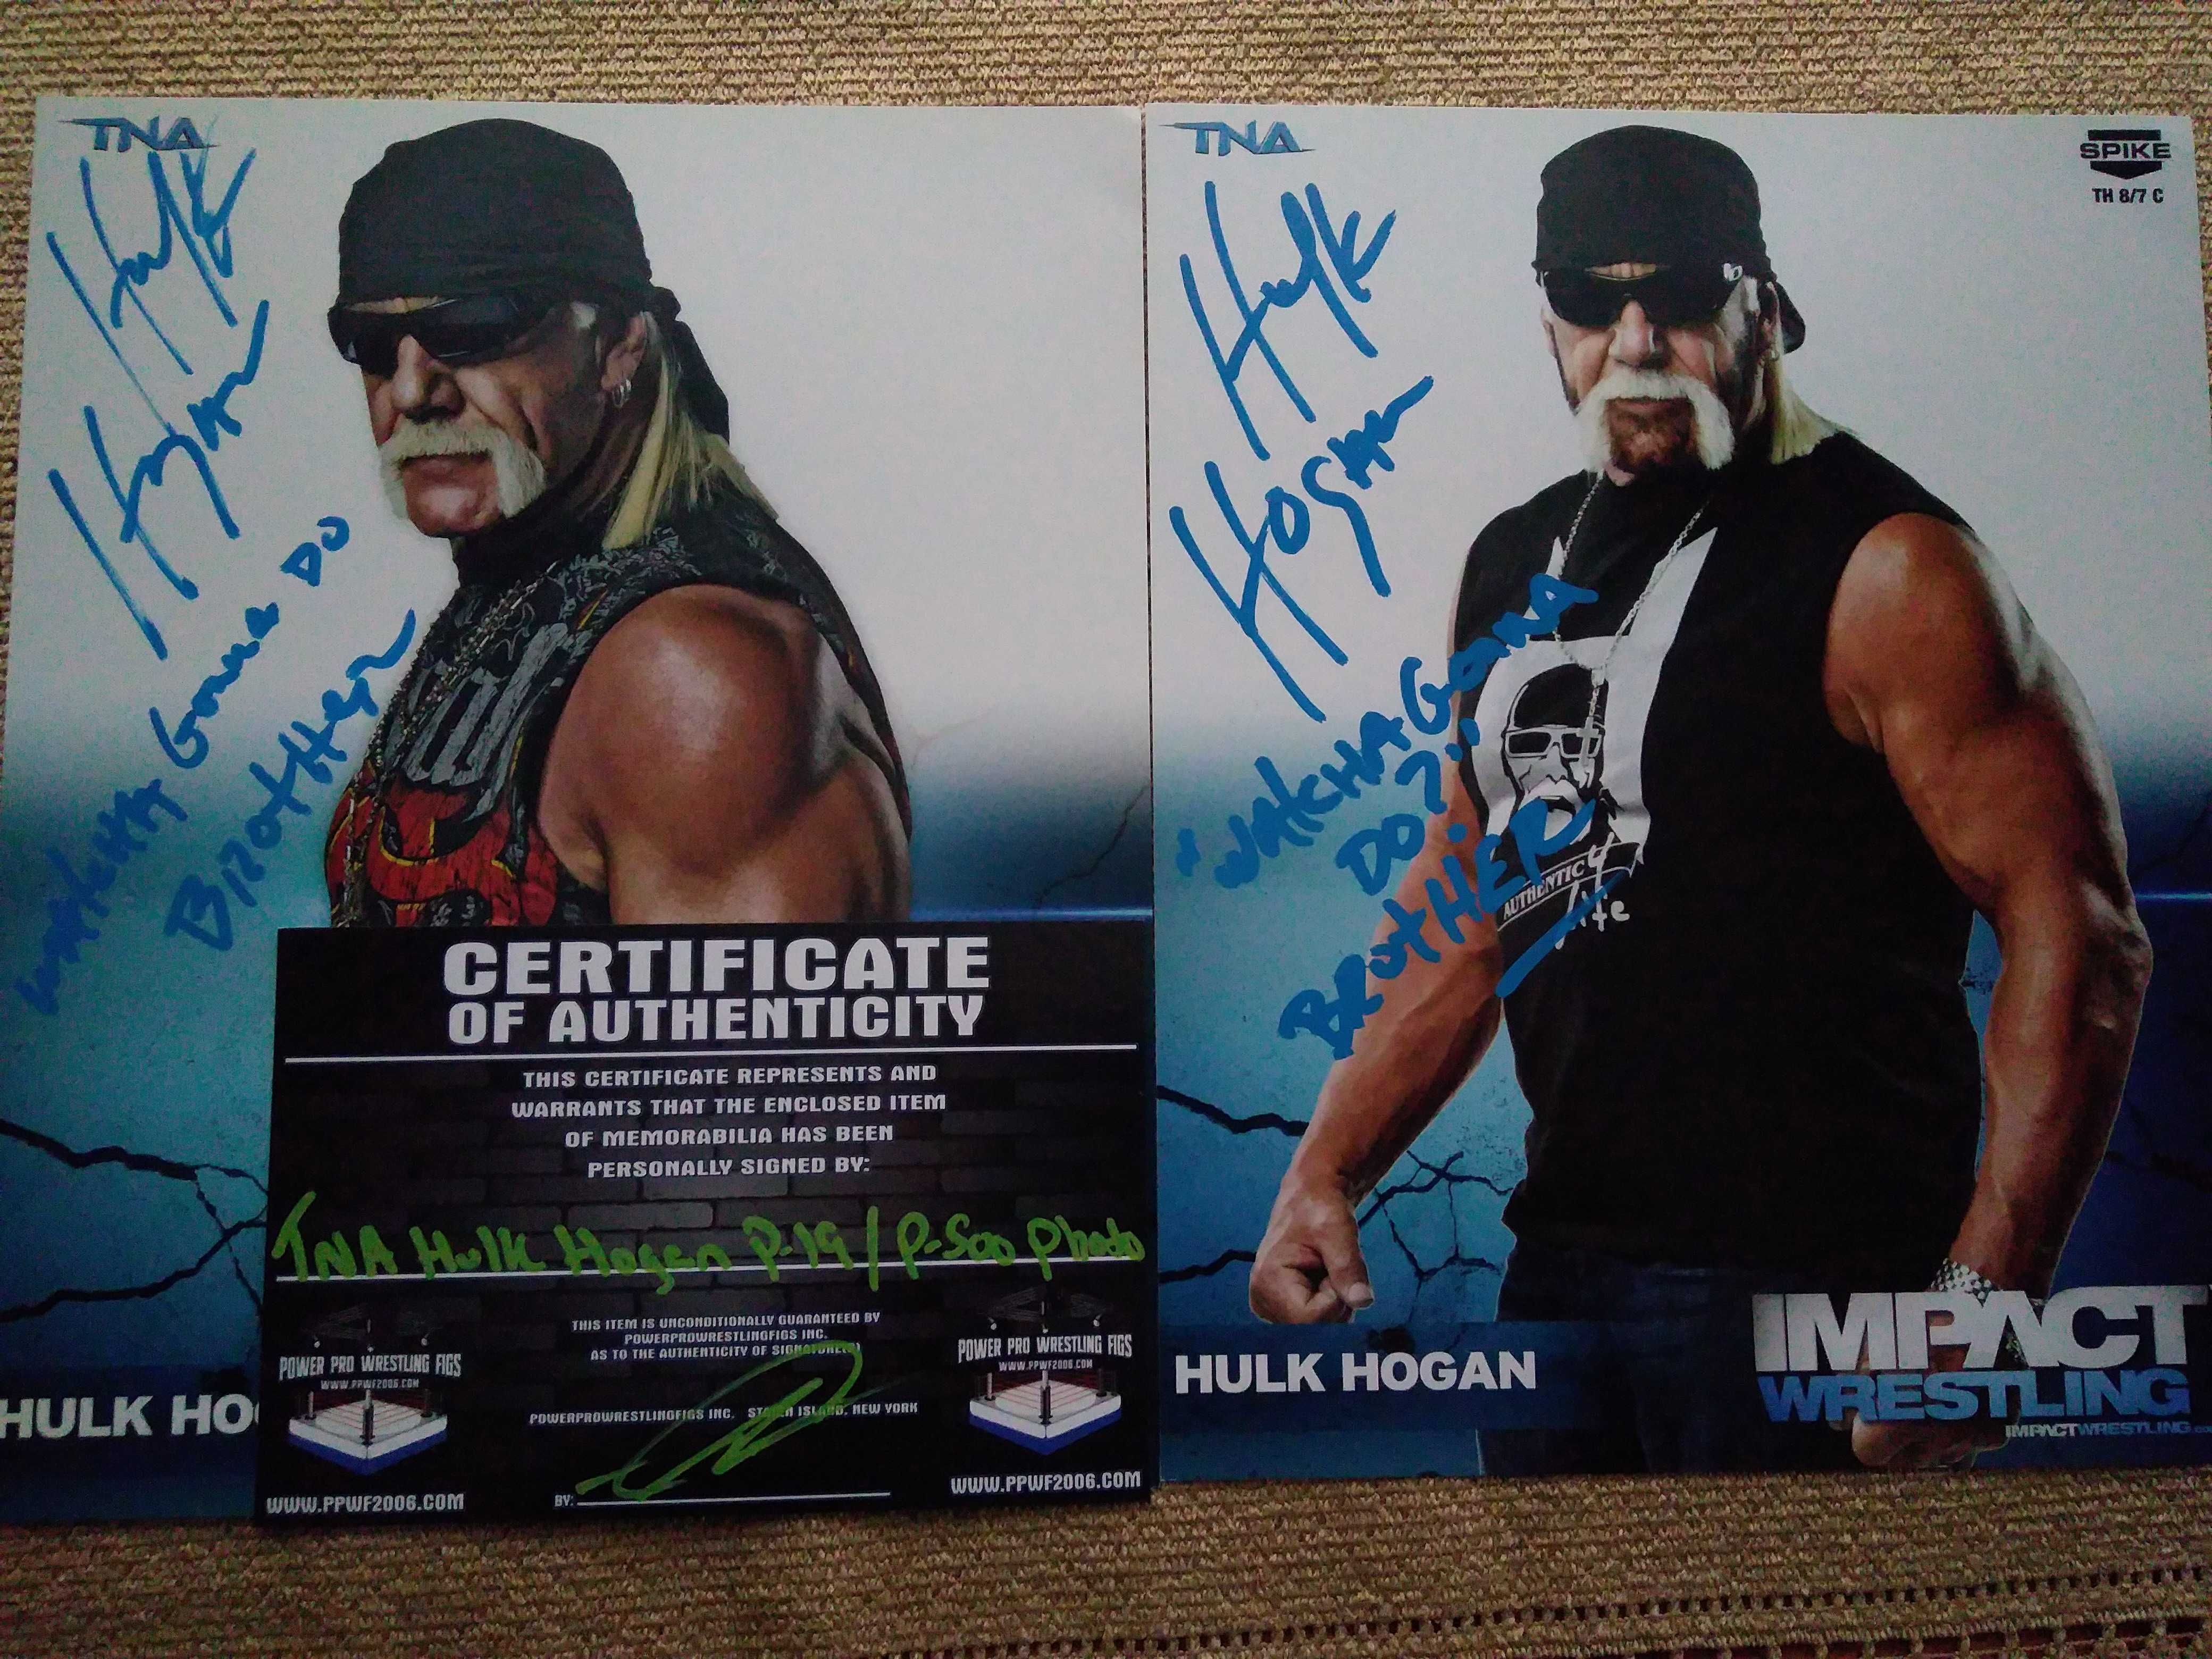 Wwe tna roh wcw Hulk Hogan autograf oryginał wrestling + coa dowód